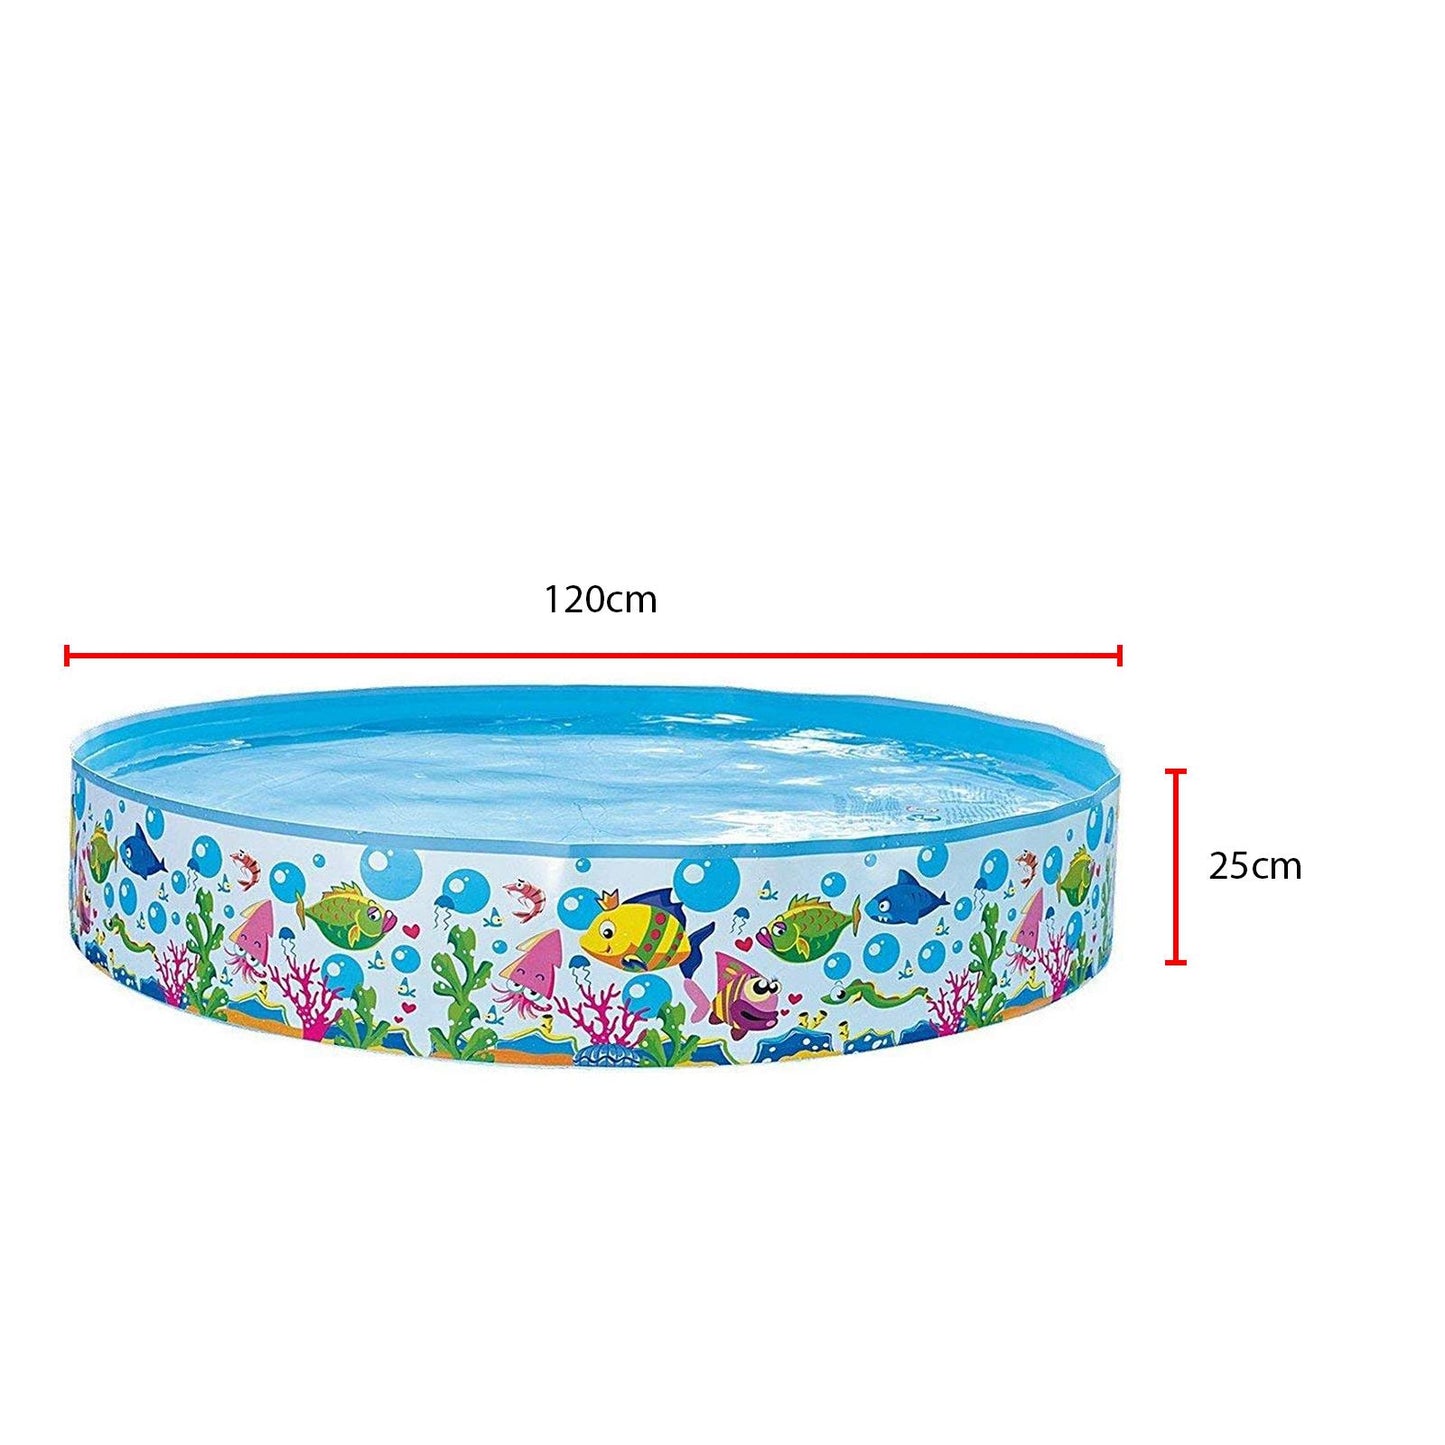 120 x 25cm Rigid Wall Paddling Pool for Summer Fun